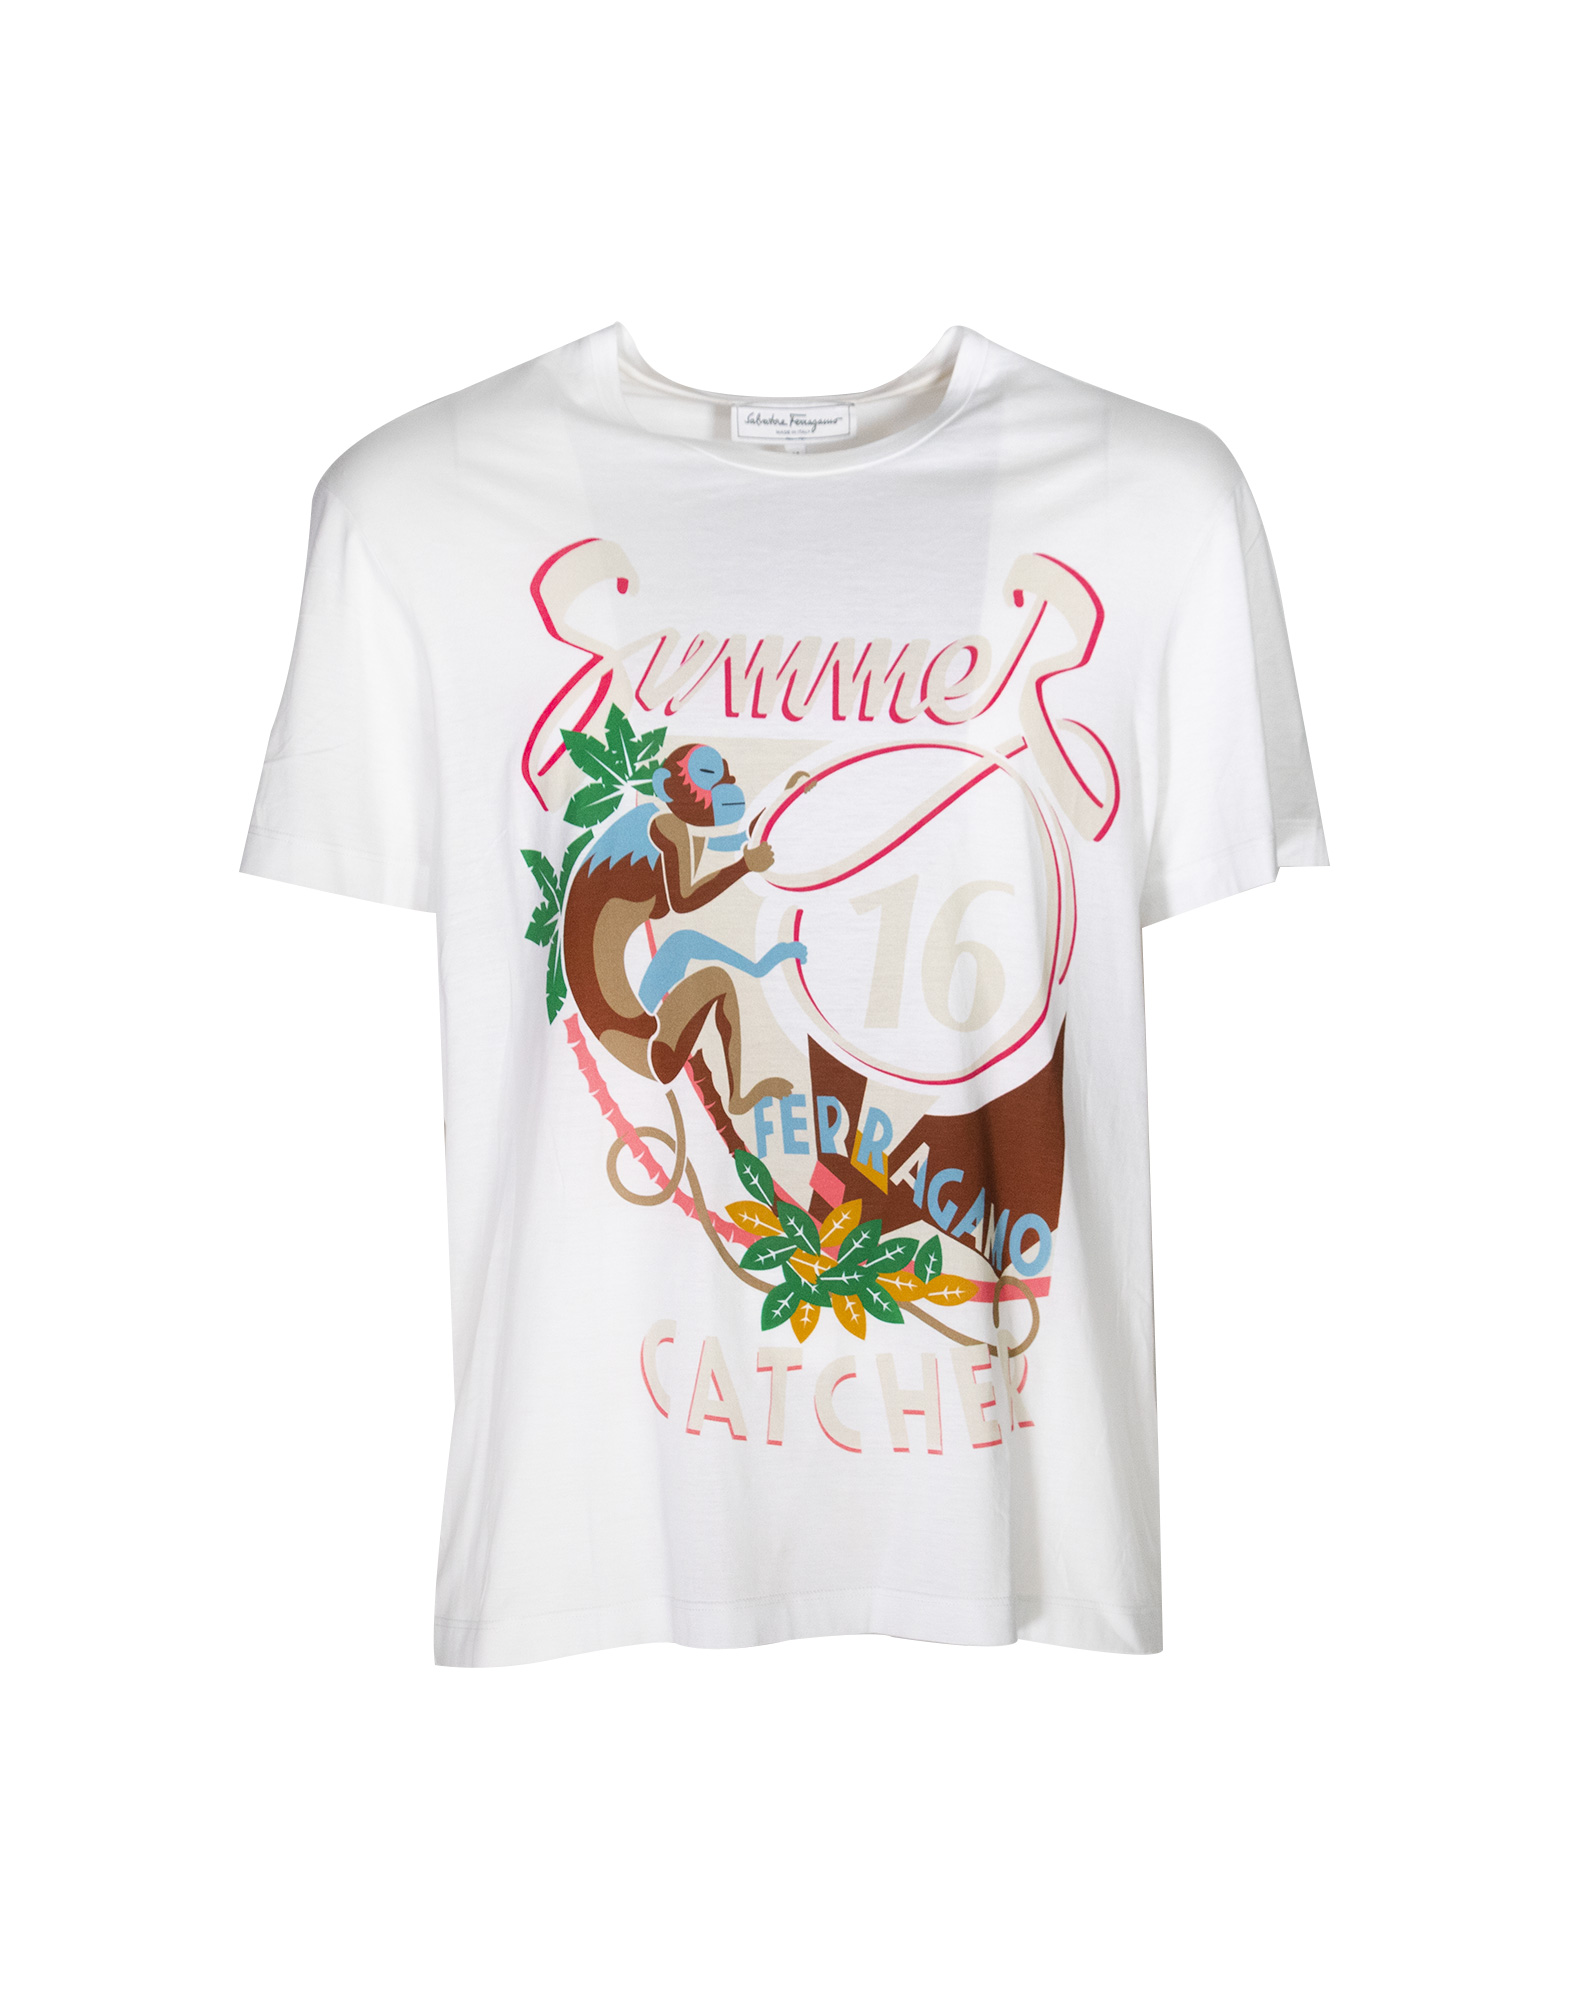 Salvatore Ferragamo - Men's t-shirt with print